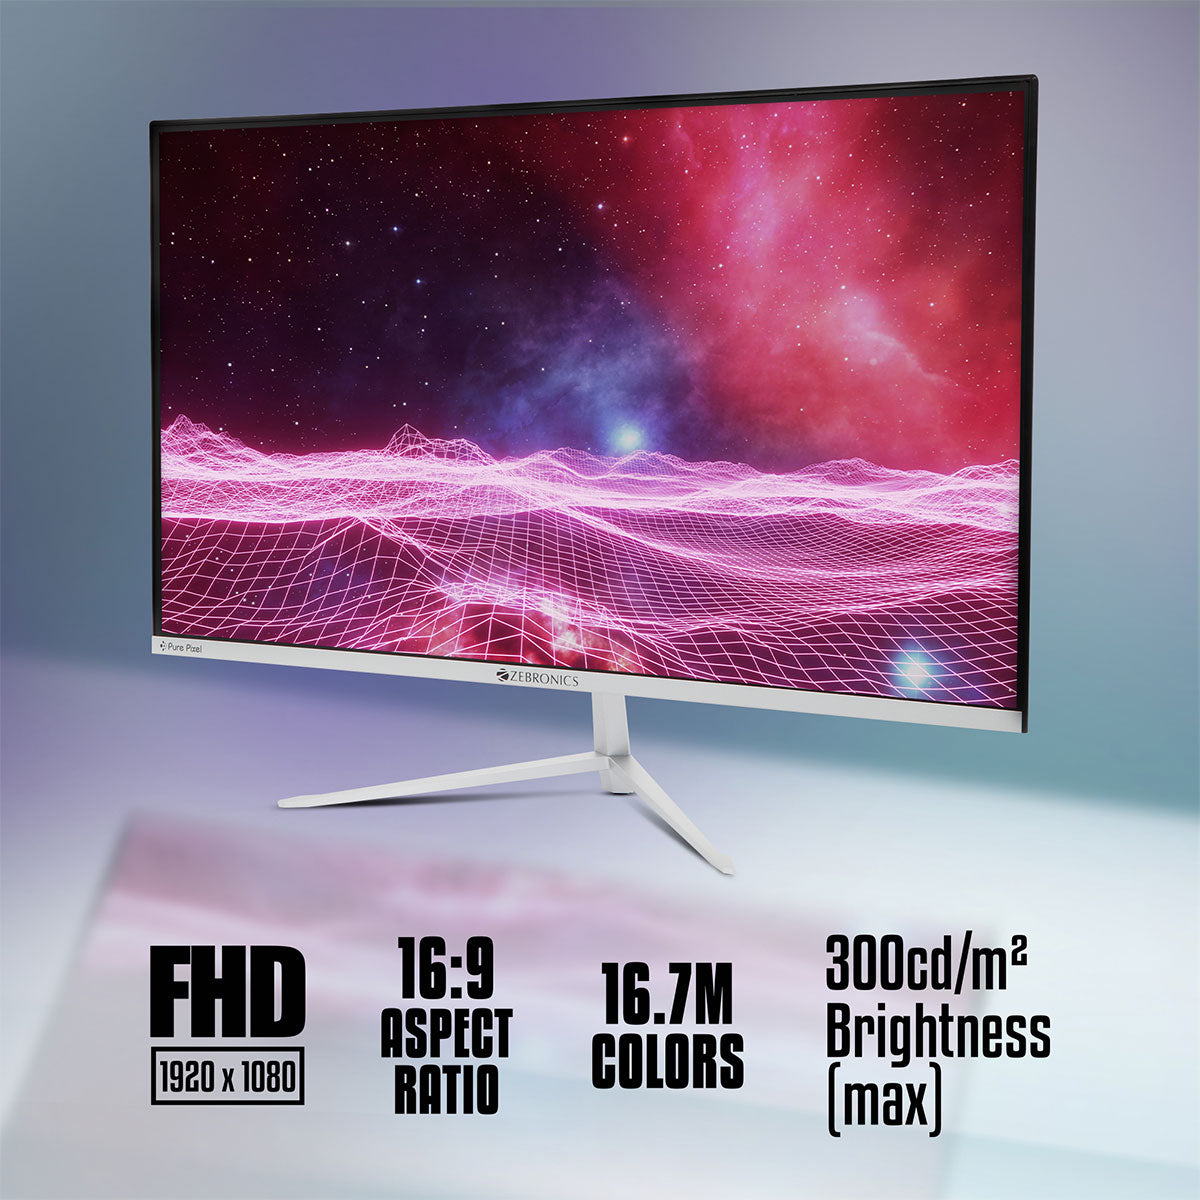 ZEB-A24FHD LED (165Hz) - Gaming Monitor - Zebronics